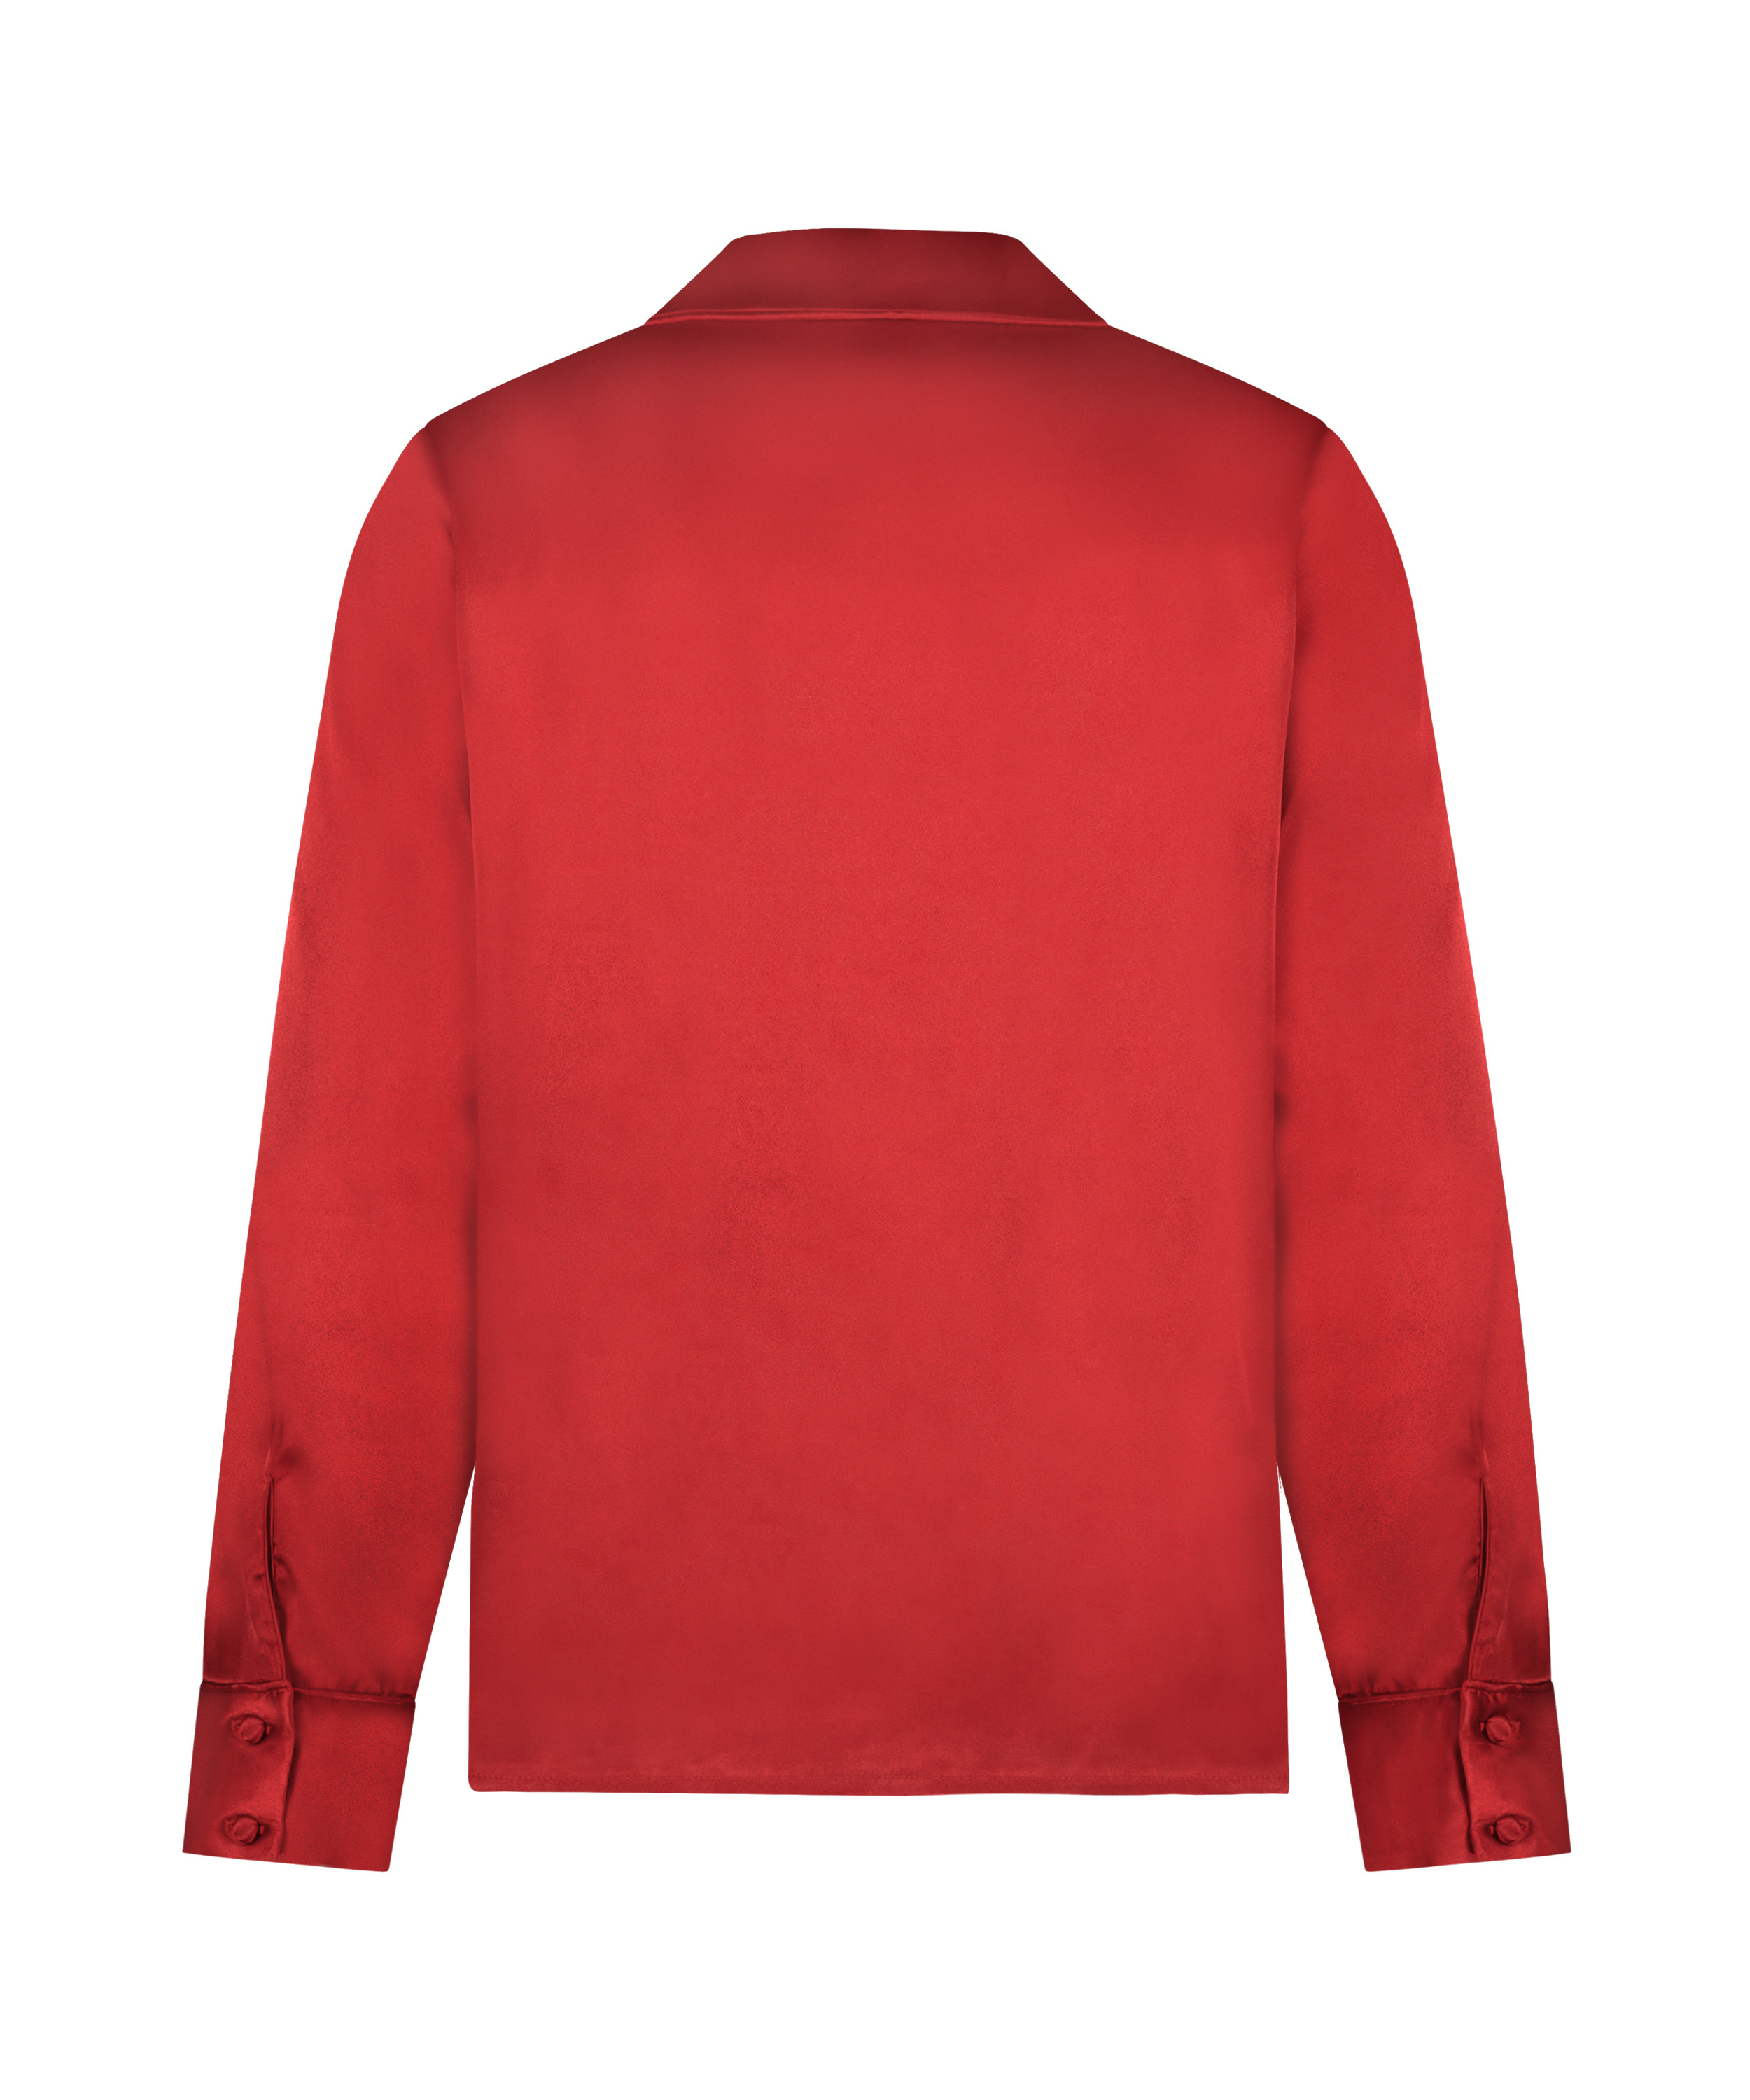 Satin Long-Sleeved Jacket, Red, main